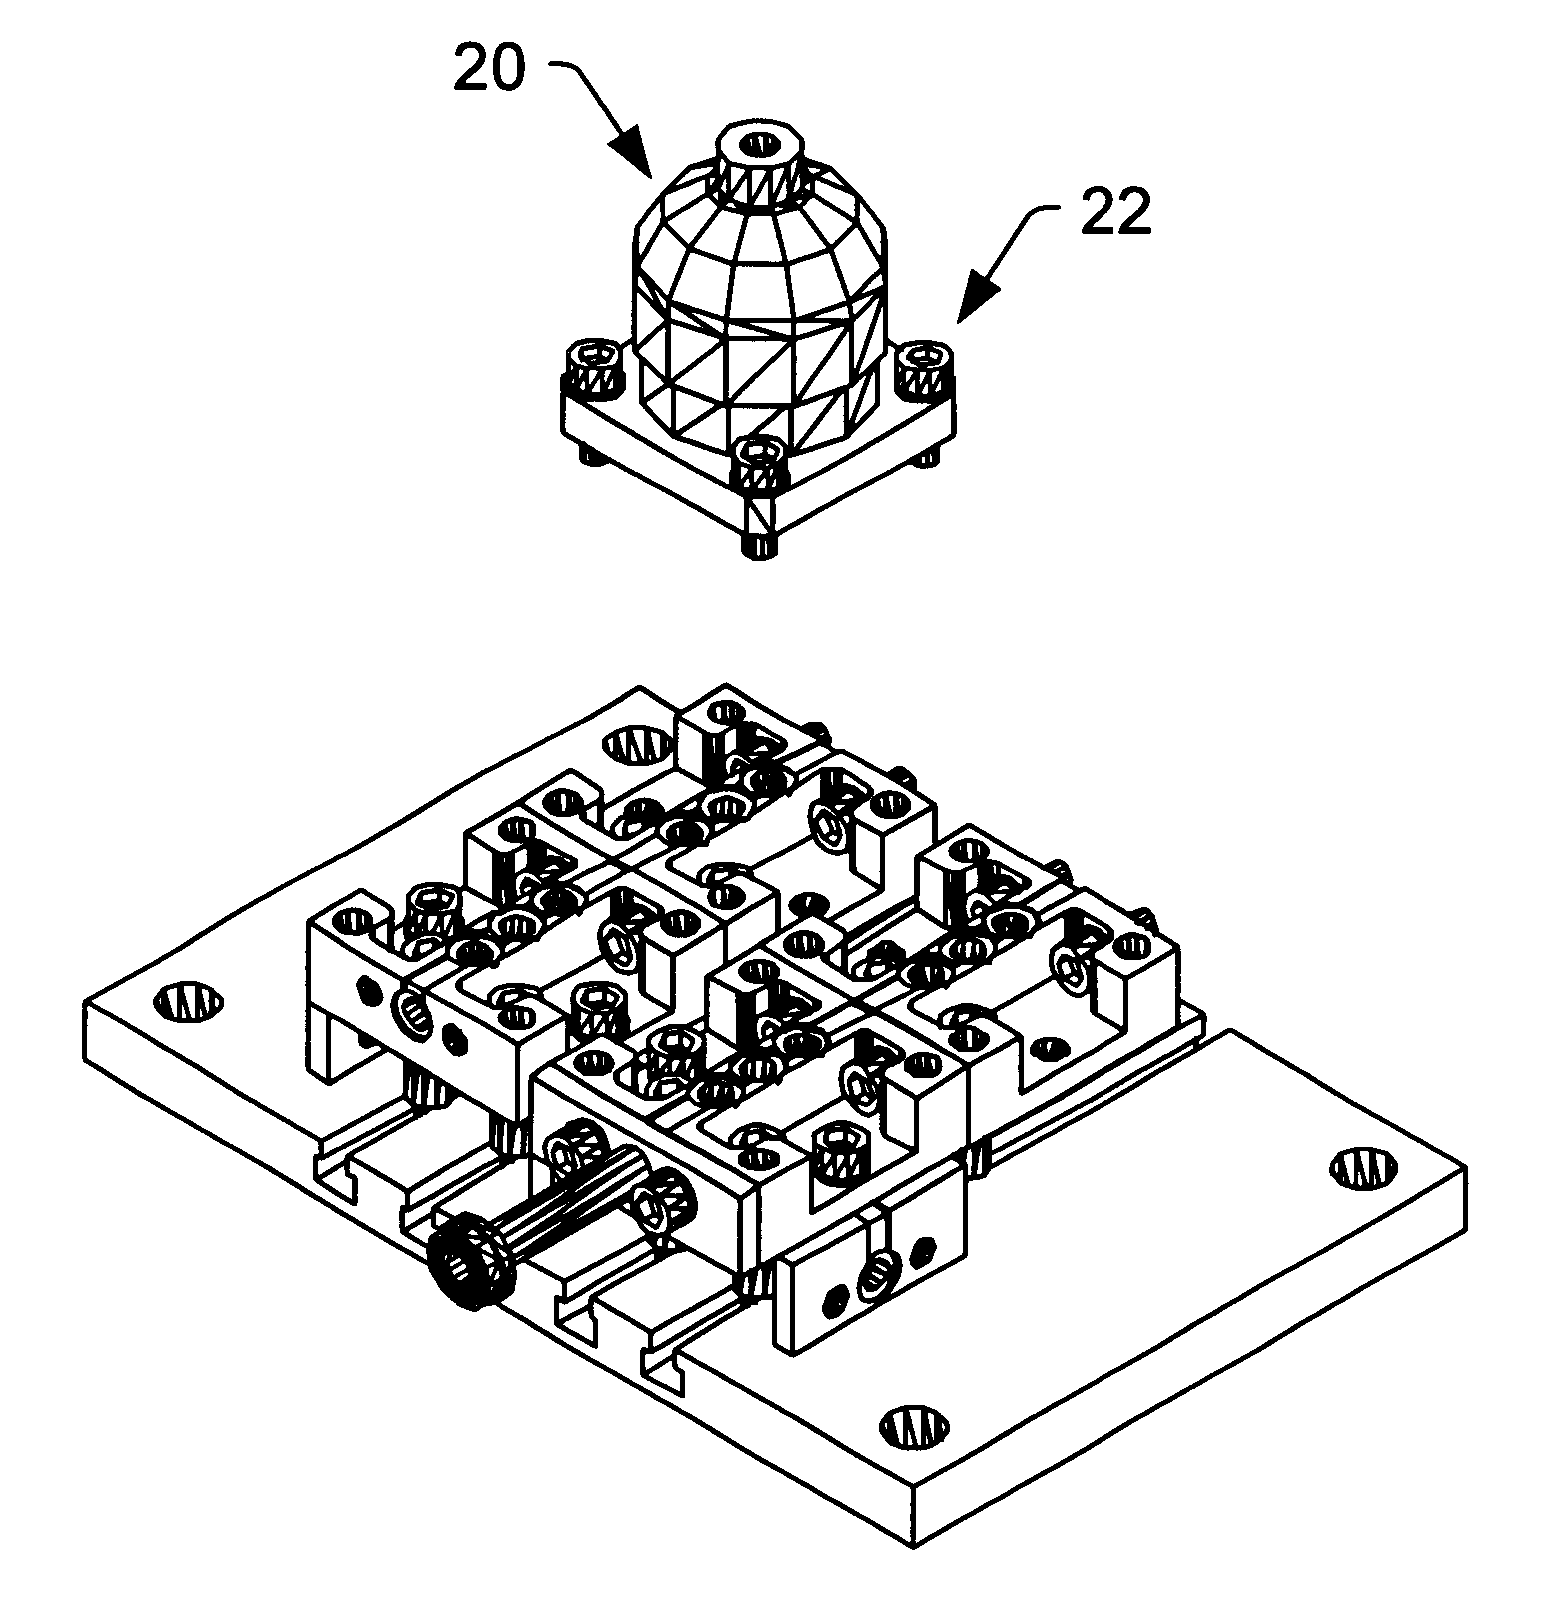 Apparatus for assembling modular chemical distribution substrate blocks